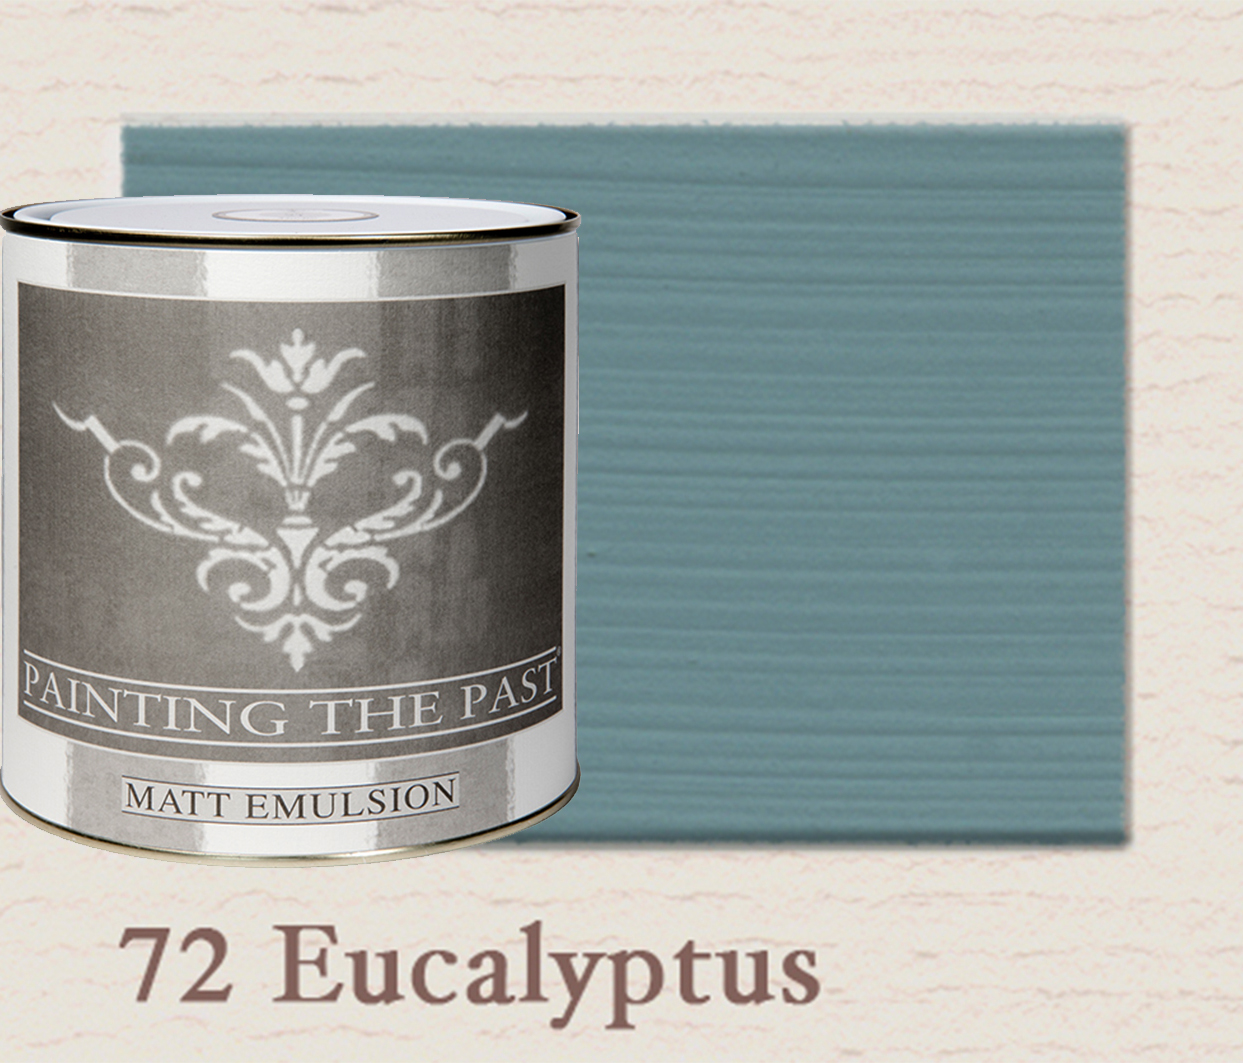 Painting The Past Matt Emulsion Eucalyptus